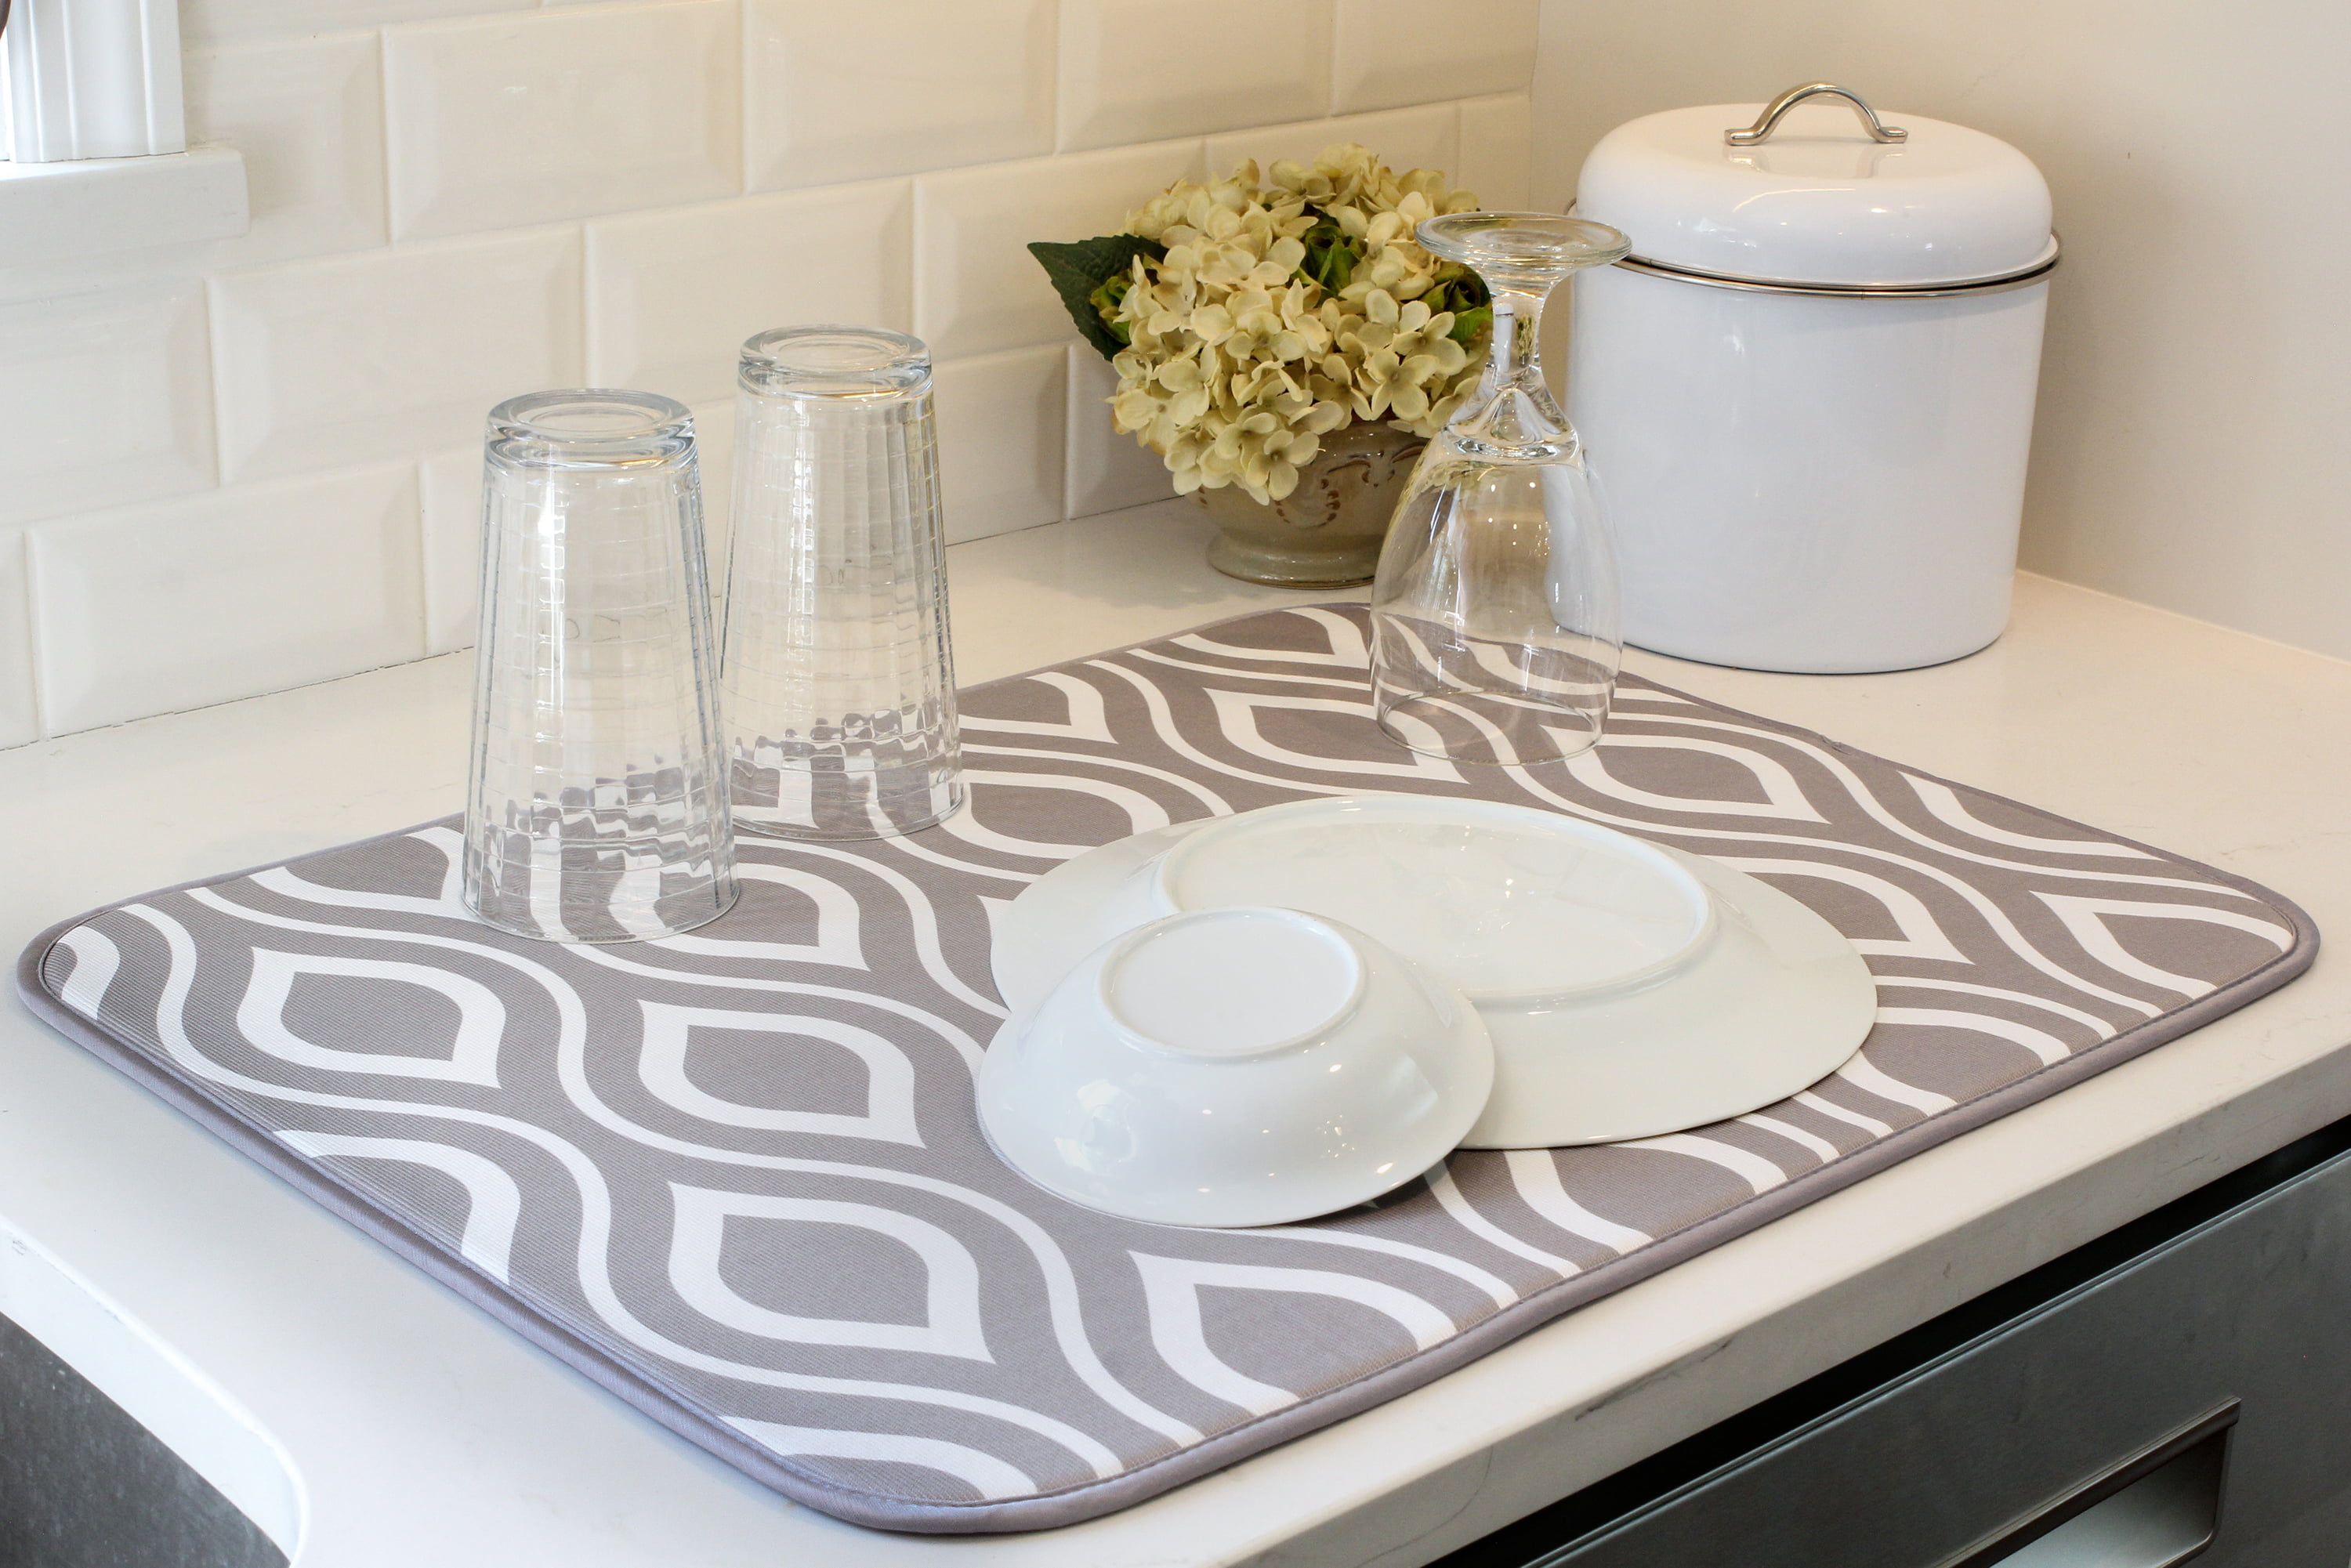 Teal XL Reversible Microfiber Dish Drying Mat by S&T Inc. at Fleet Farm